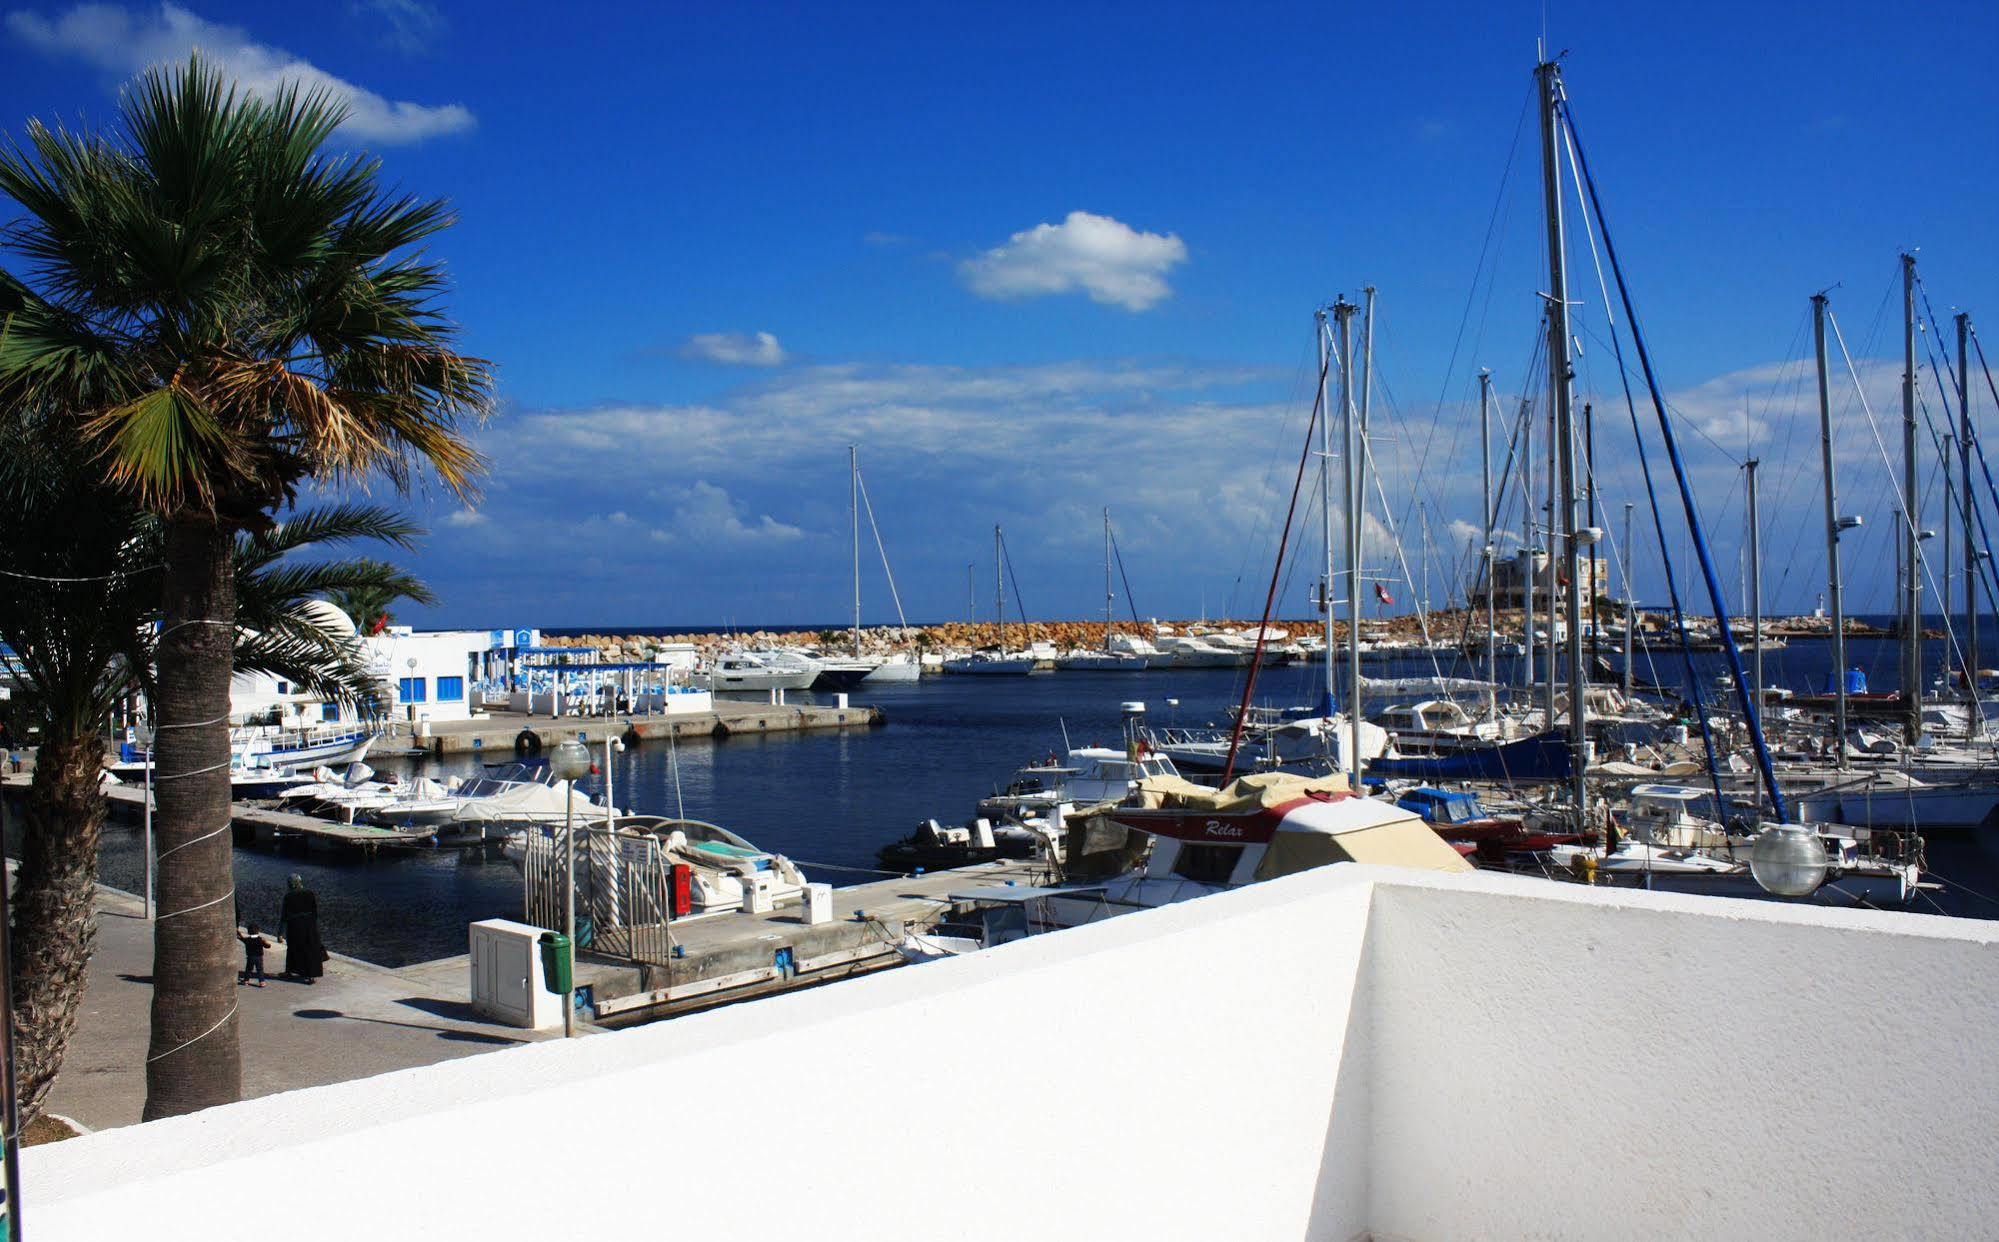 Marina Cap Monastir- Appart'Hotel 외부 사진